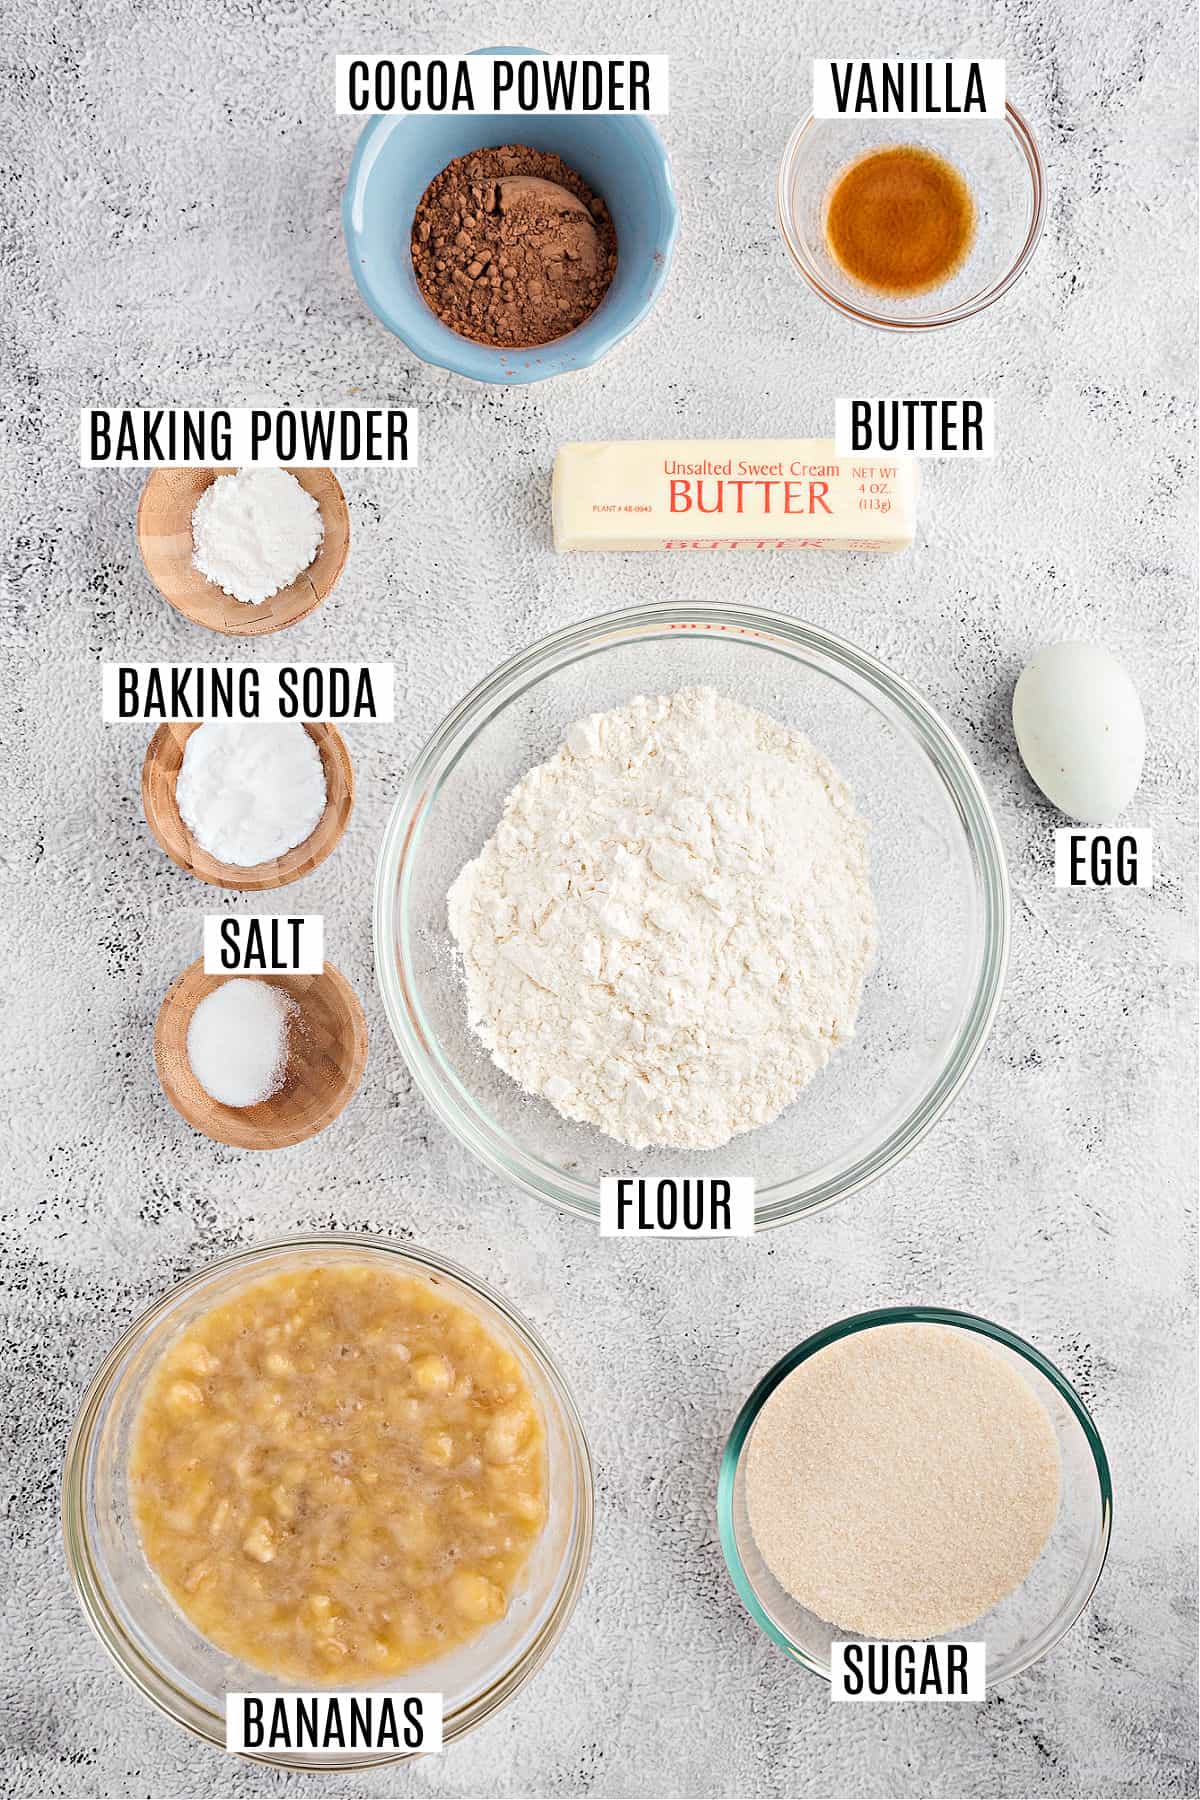 Ingredients needed to make chocolate banana muffins.